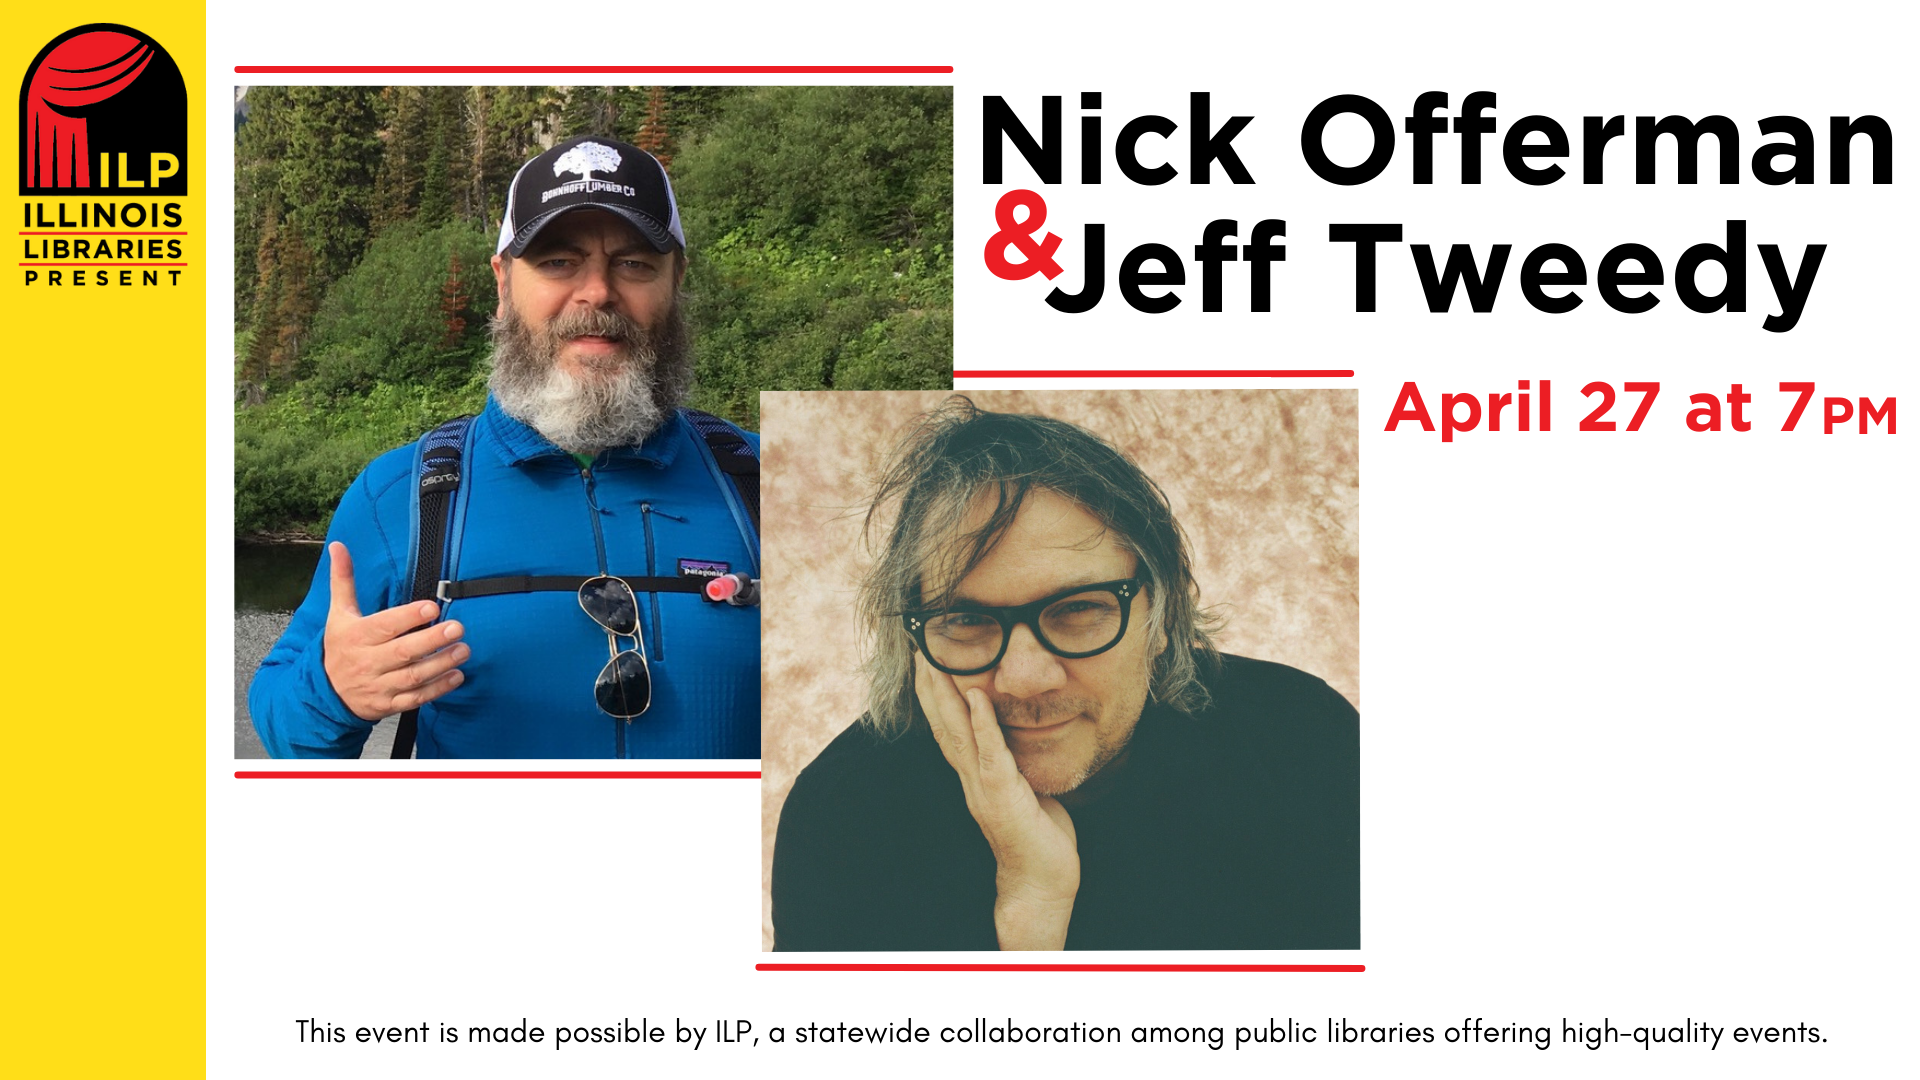 Photos of Nick Offerman and Jeff Tweedy